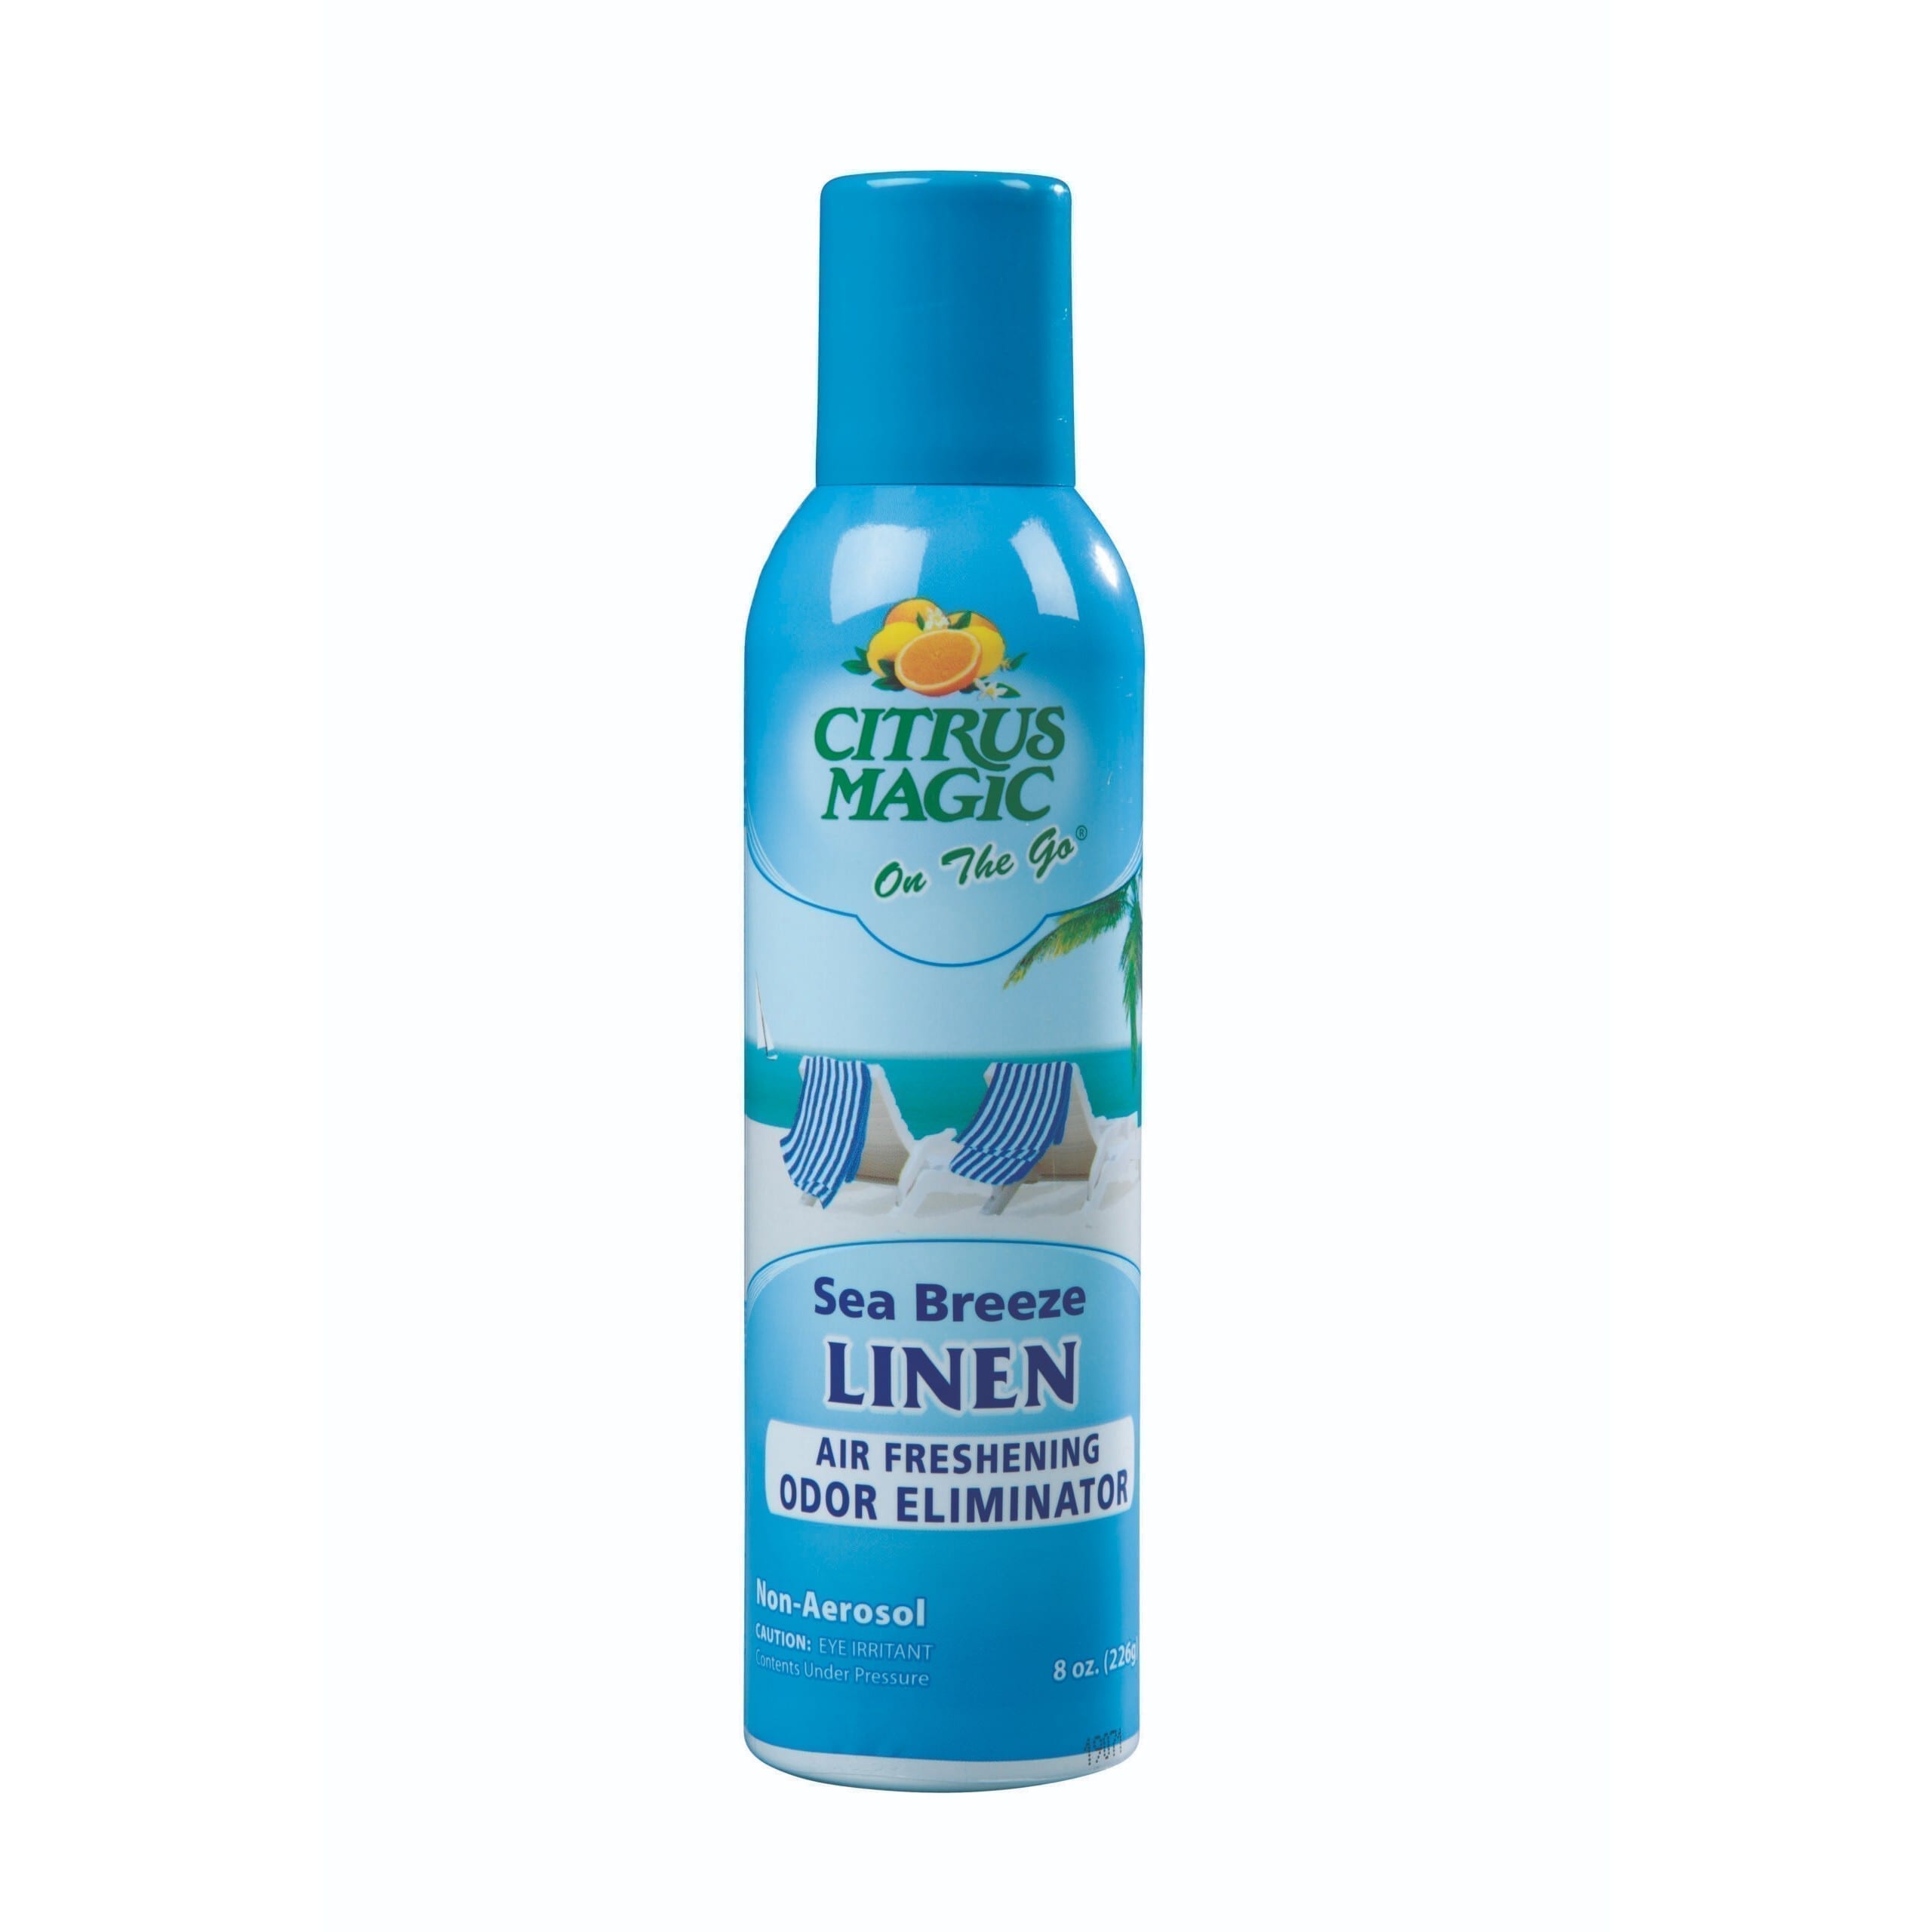 Citrus Magic On The Go Odor Eliminating Air Freshener Spray, Sea Breeze Linen